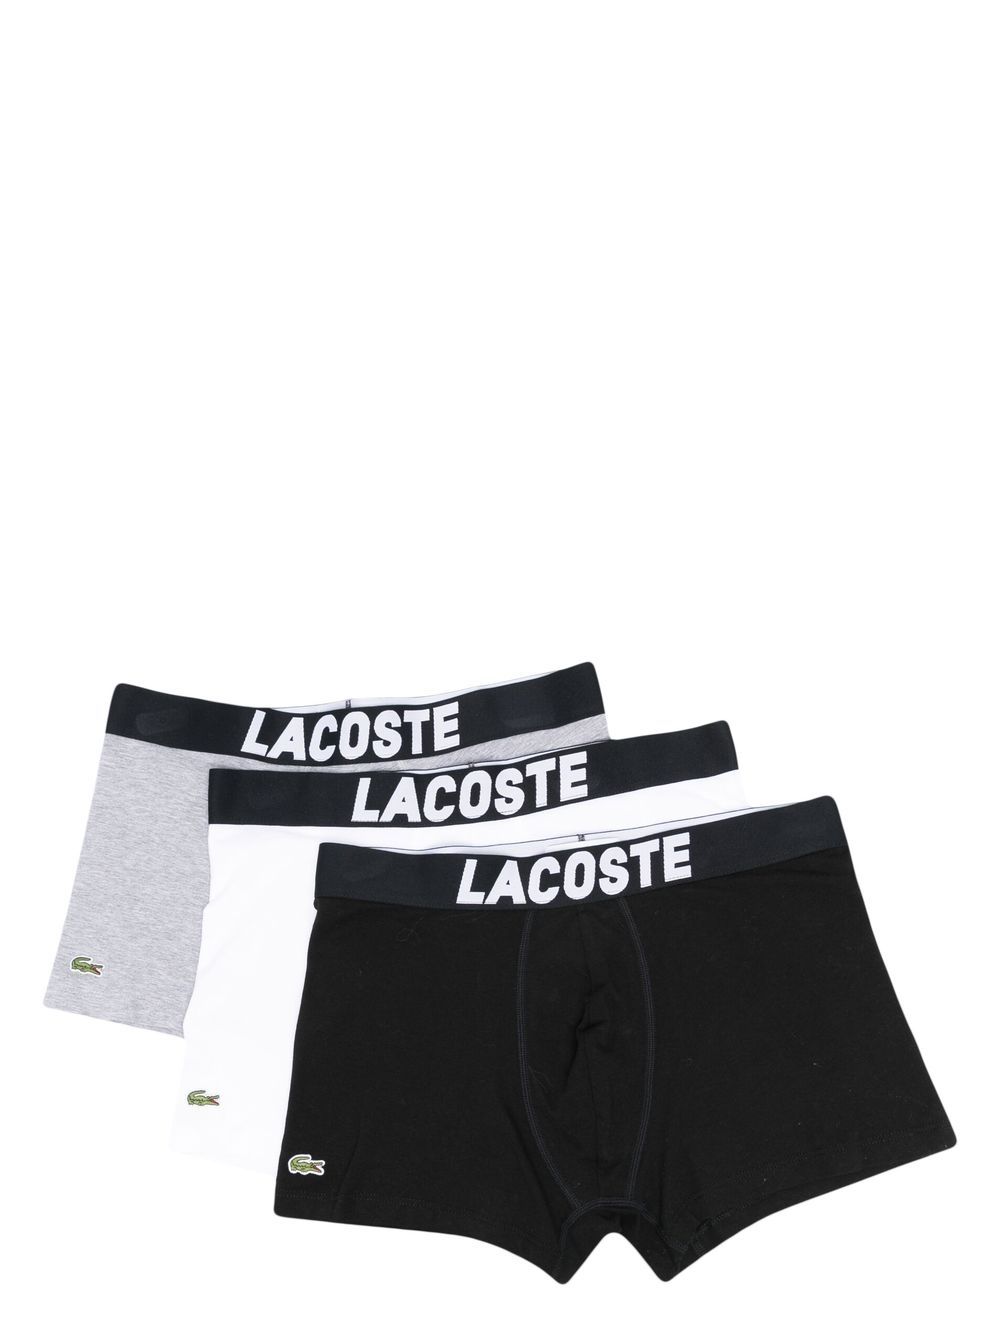 Lacoste logo-waistband boxers set of 3 - Black von Lacoste